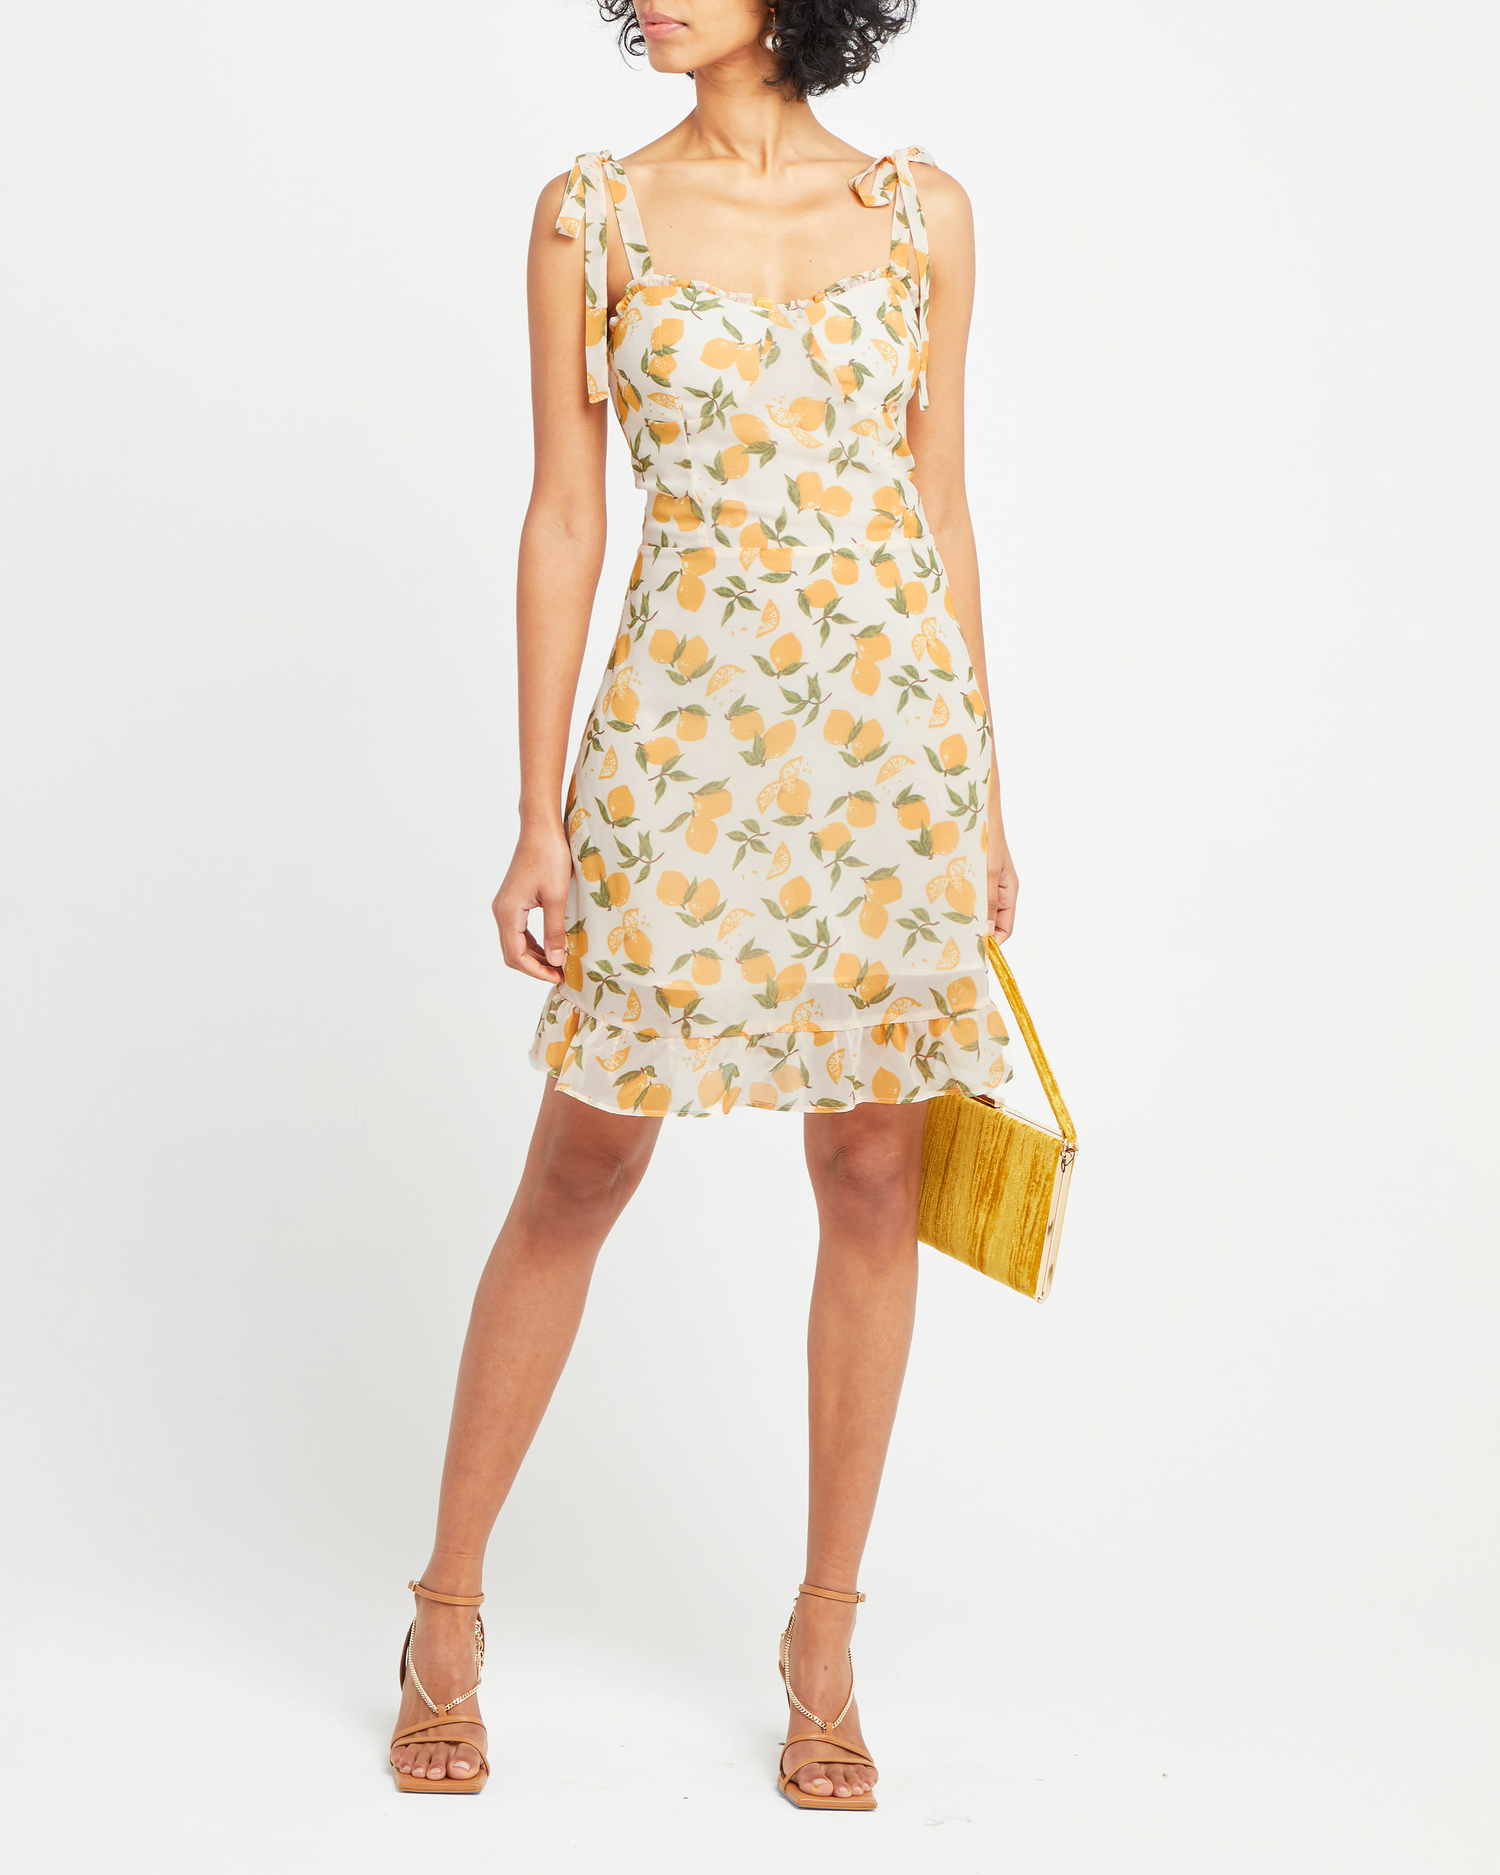 Fourth image of Sunny Dress, a yellow mini dress, ruffle, ribbon, tie straps, ribbon, bows, lemon print